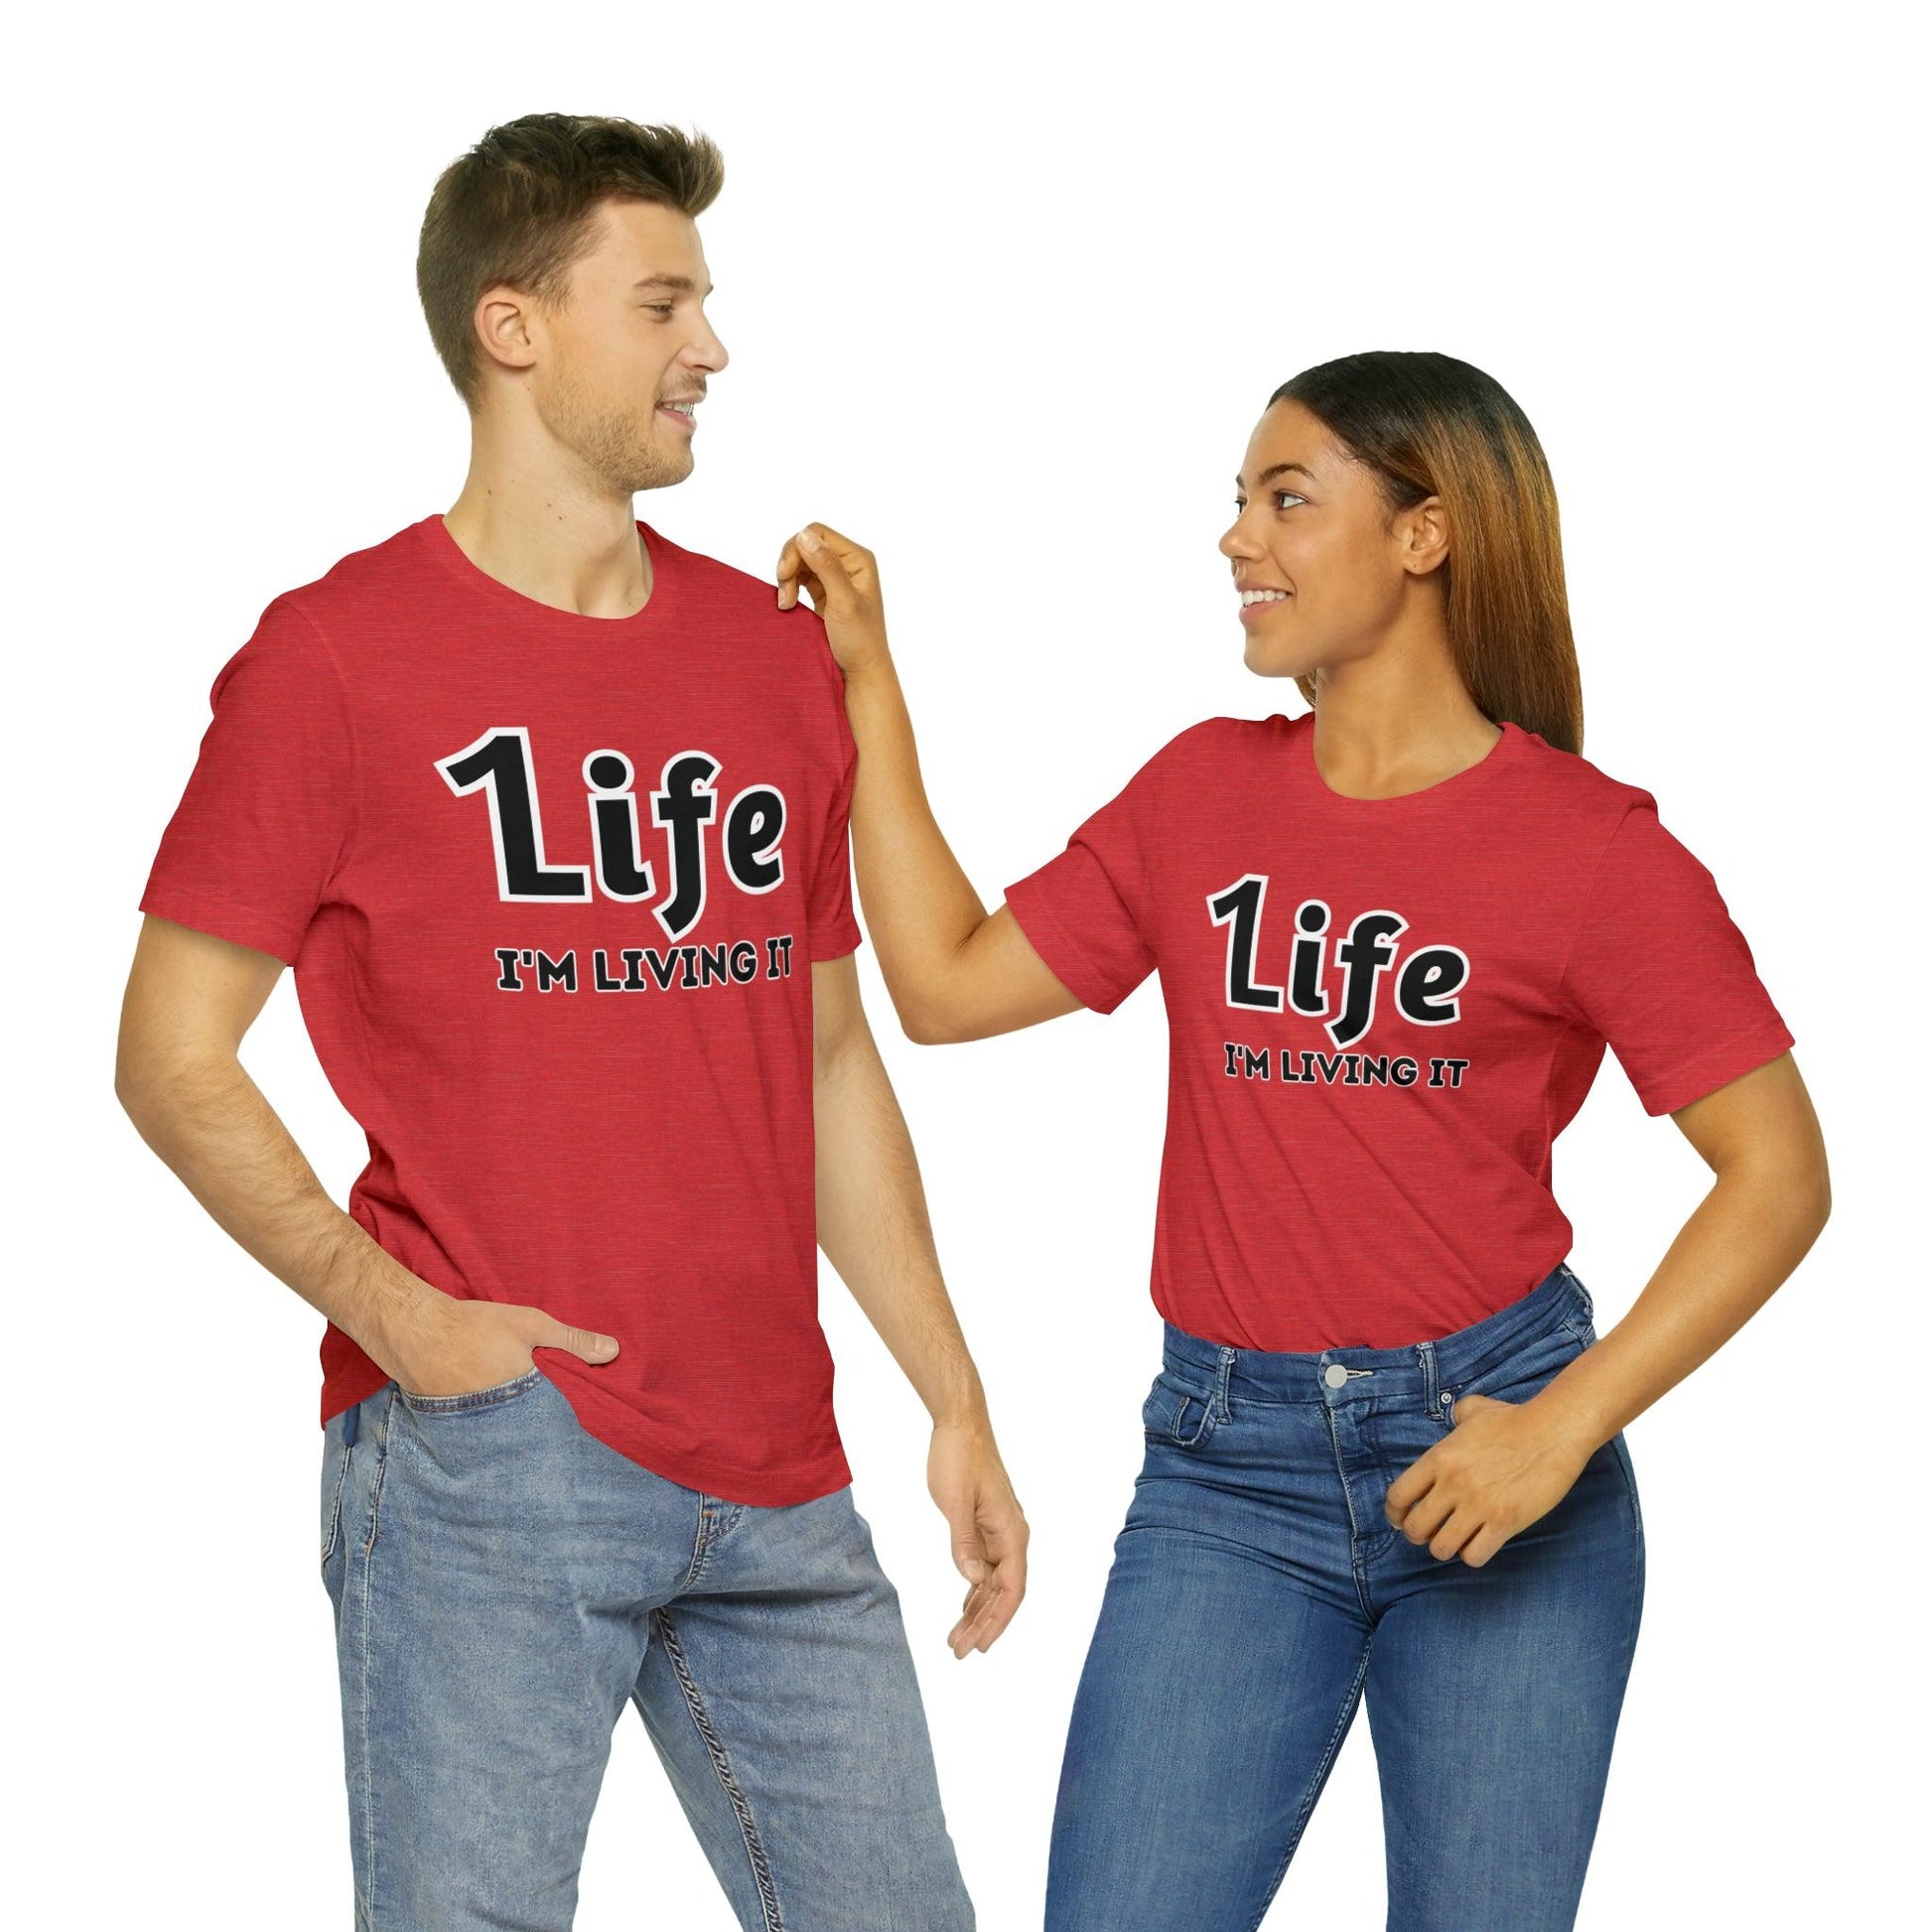 One Life I'M Living It Shirt One life Shirt 1life shirt Live Your Life You Only Have One Life To Live Shirt - Giftsmojo